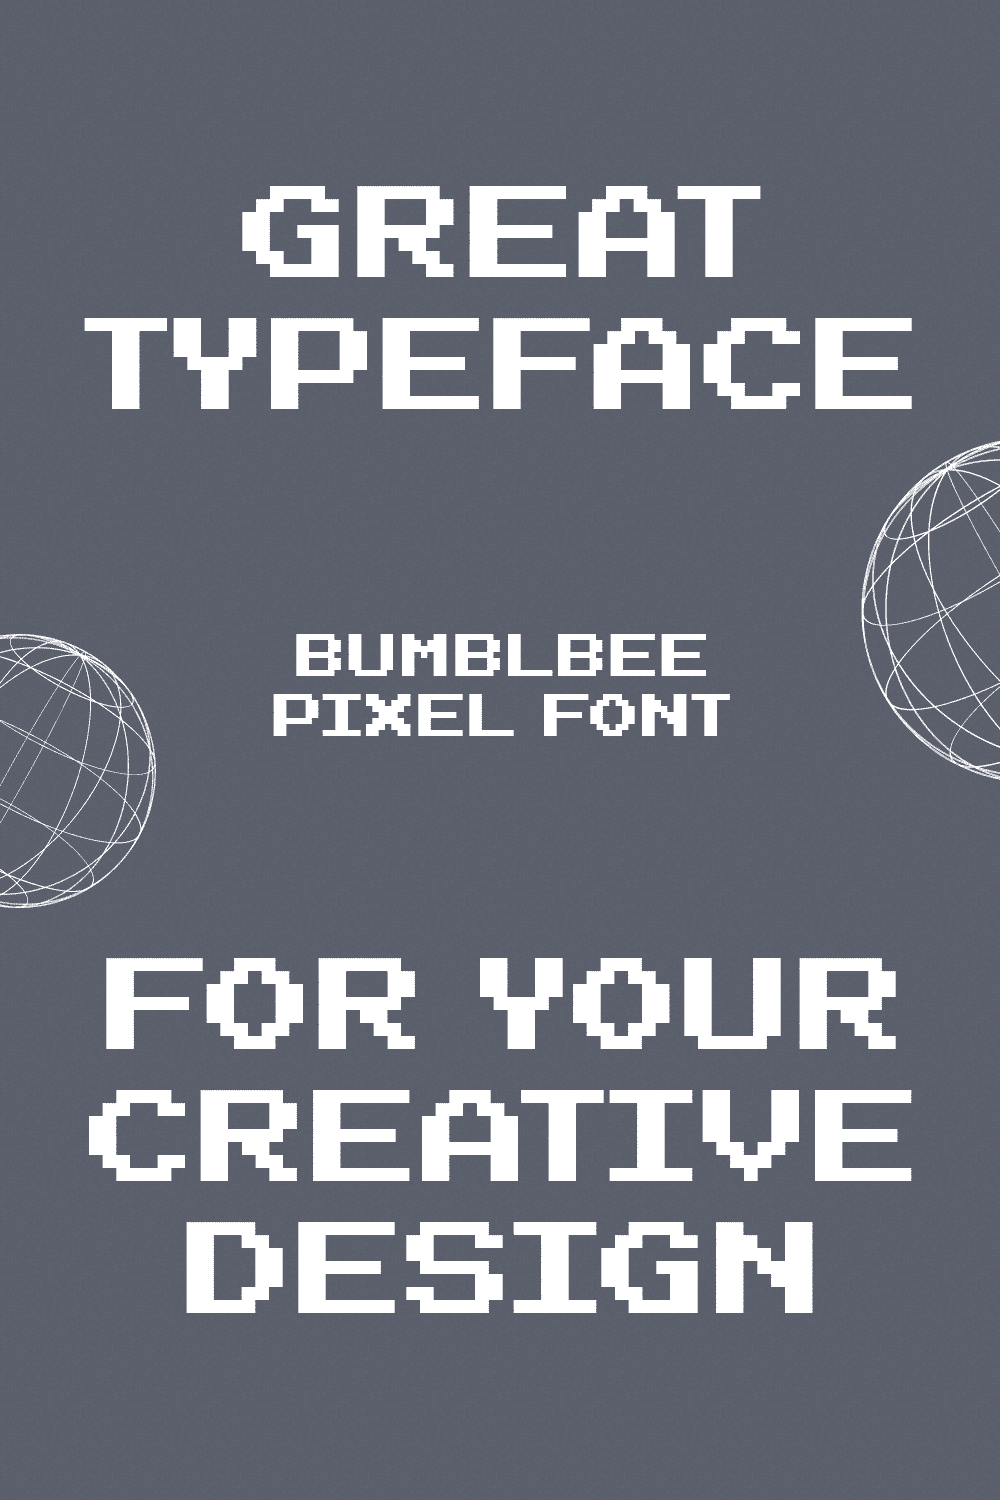 03 bumblbee pixel font pinterest